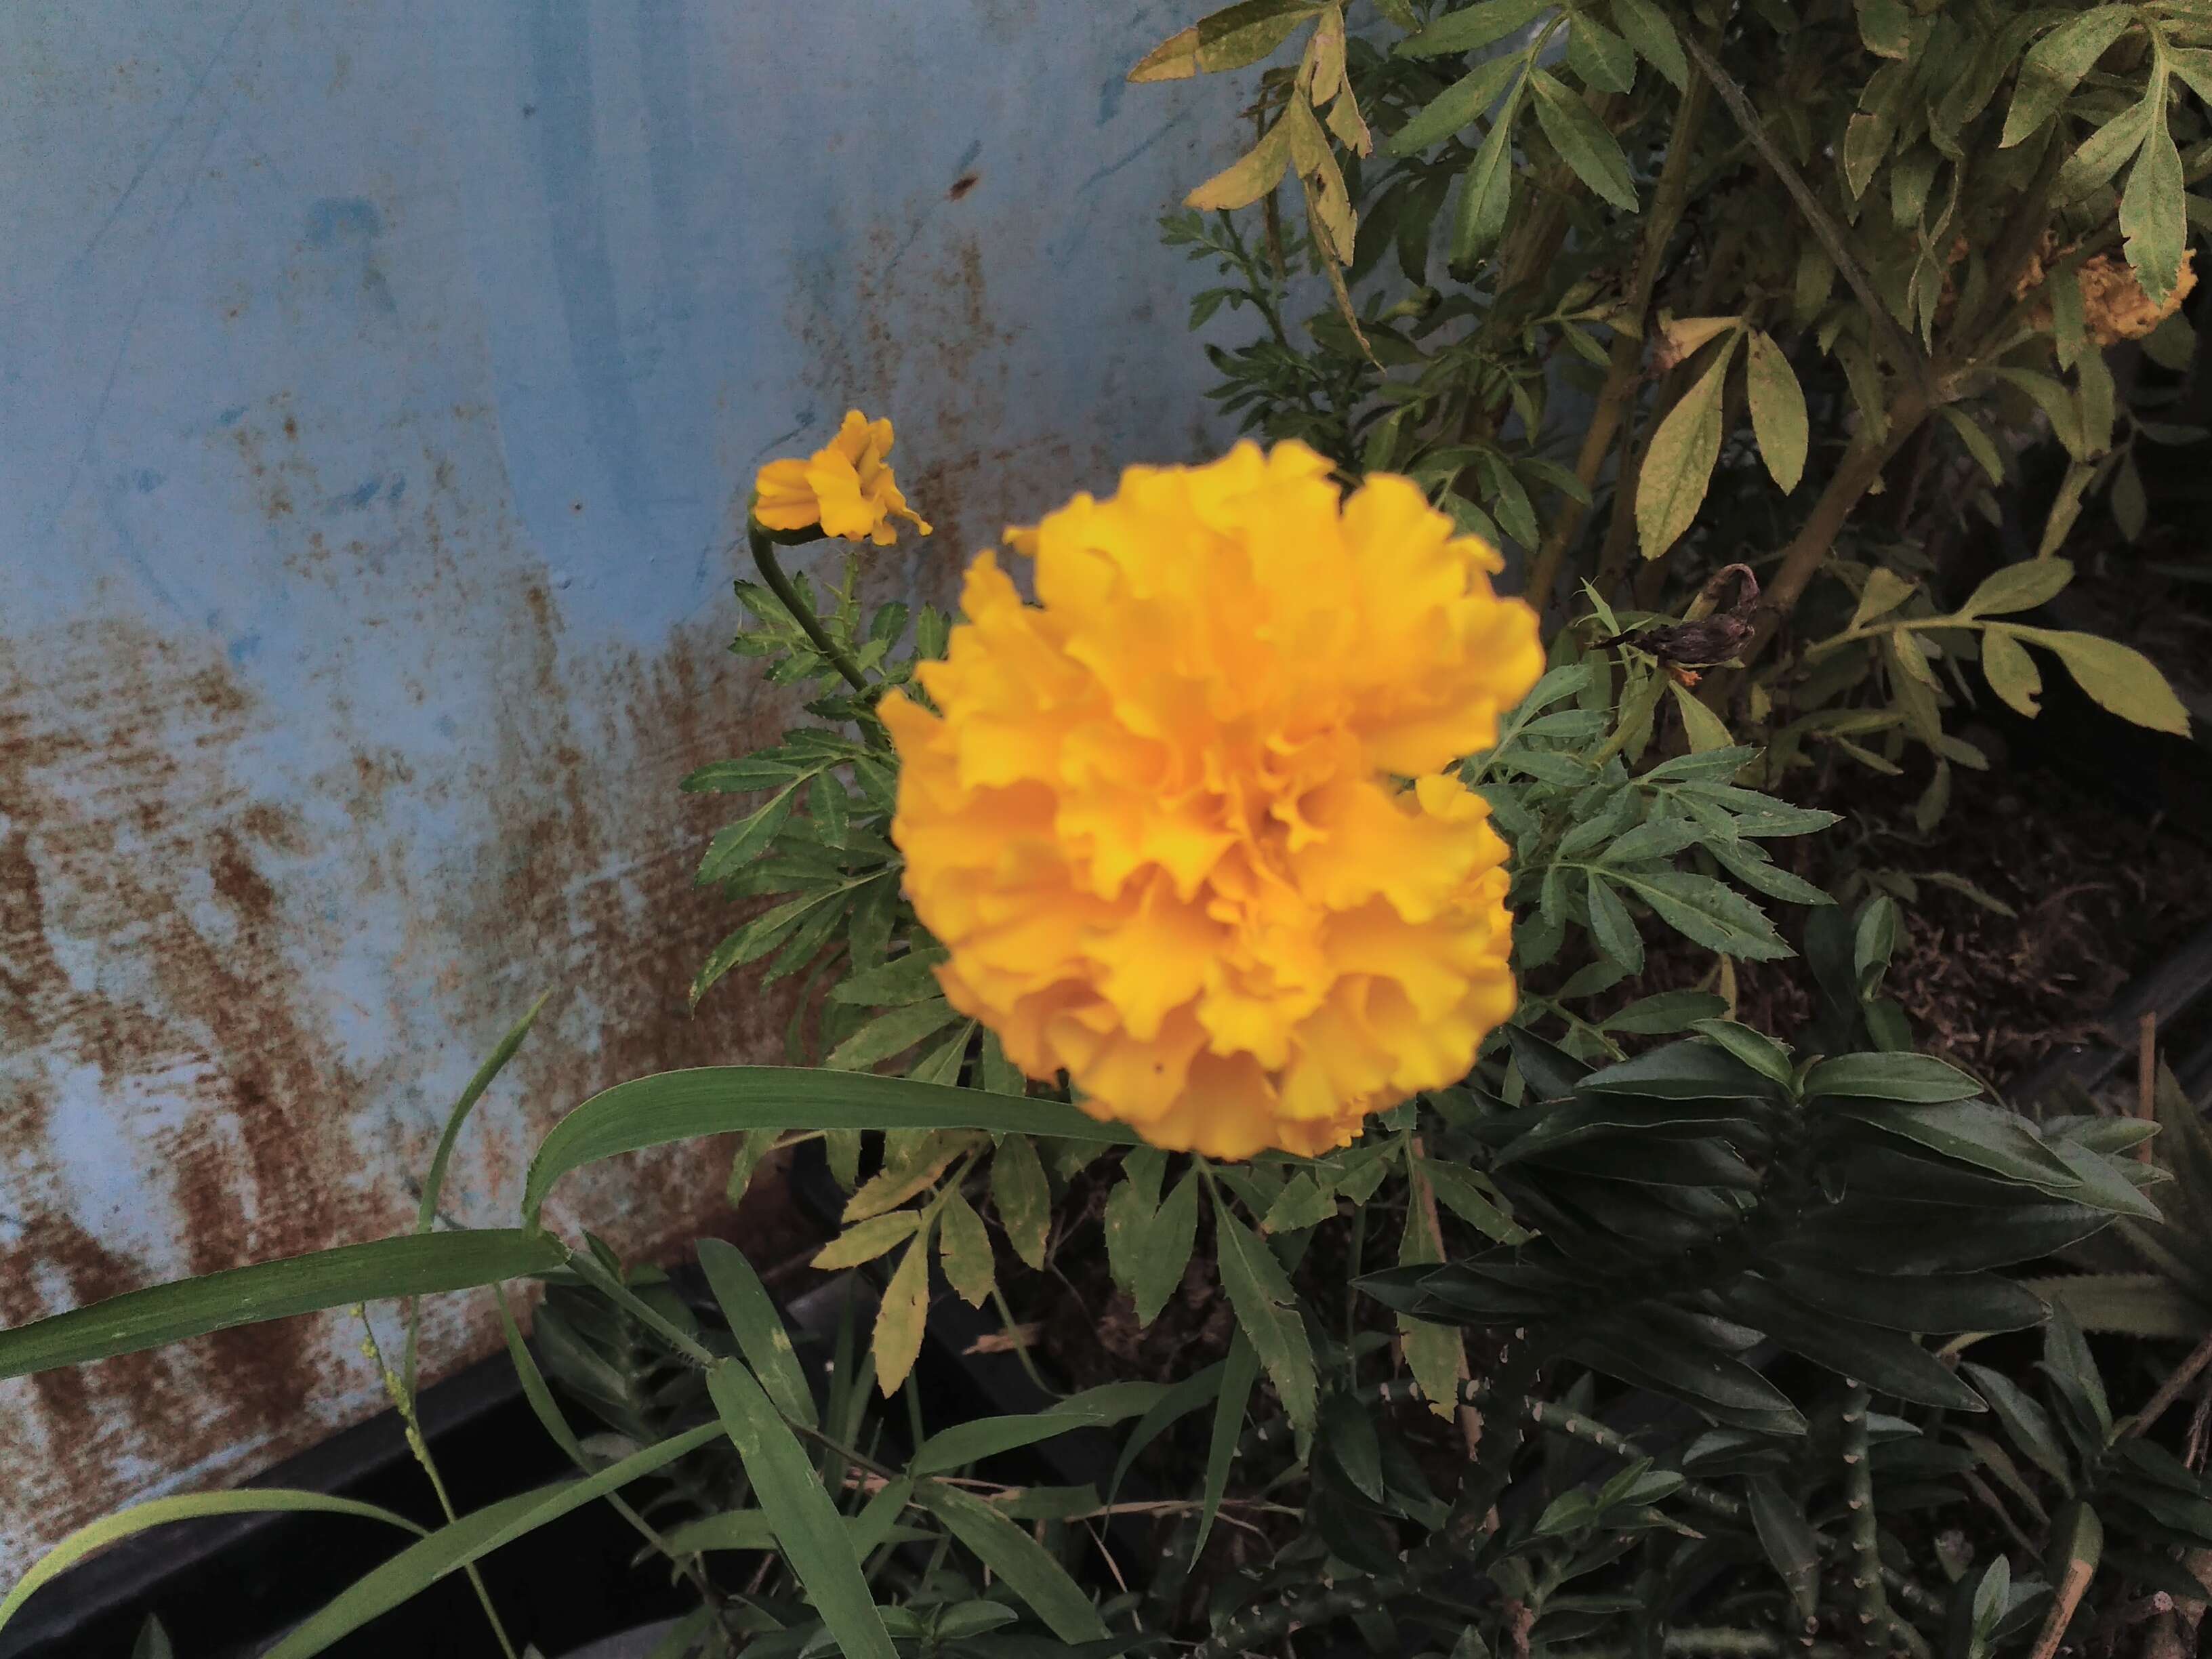 Image of French marigold